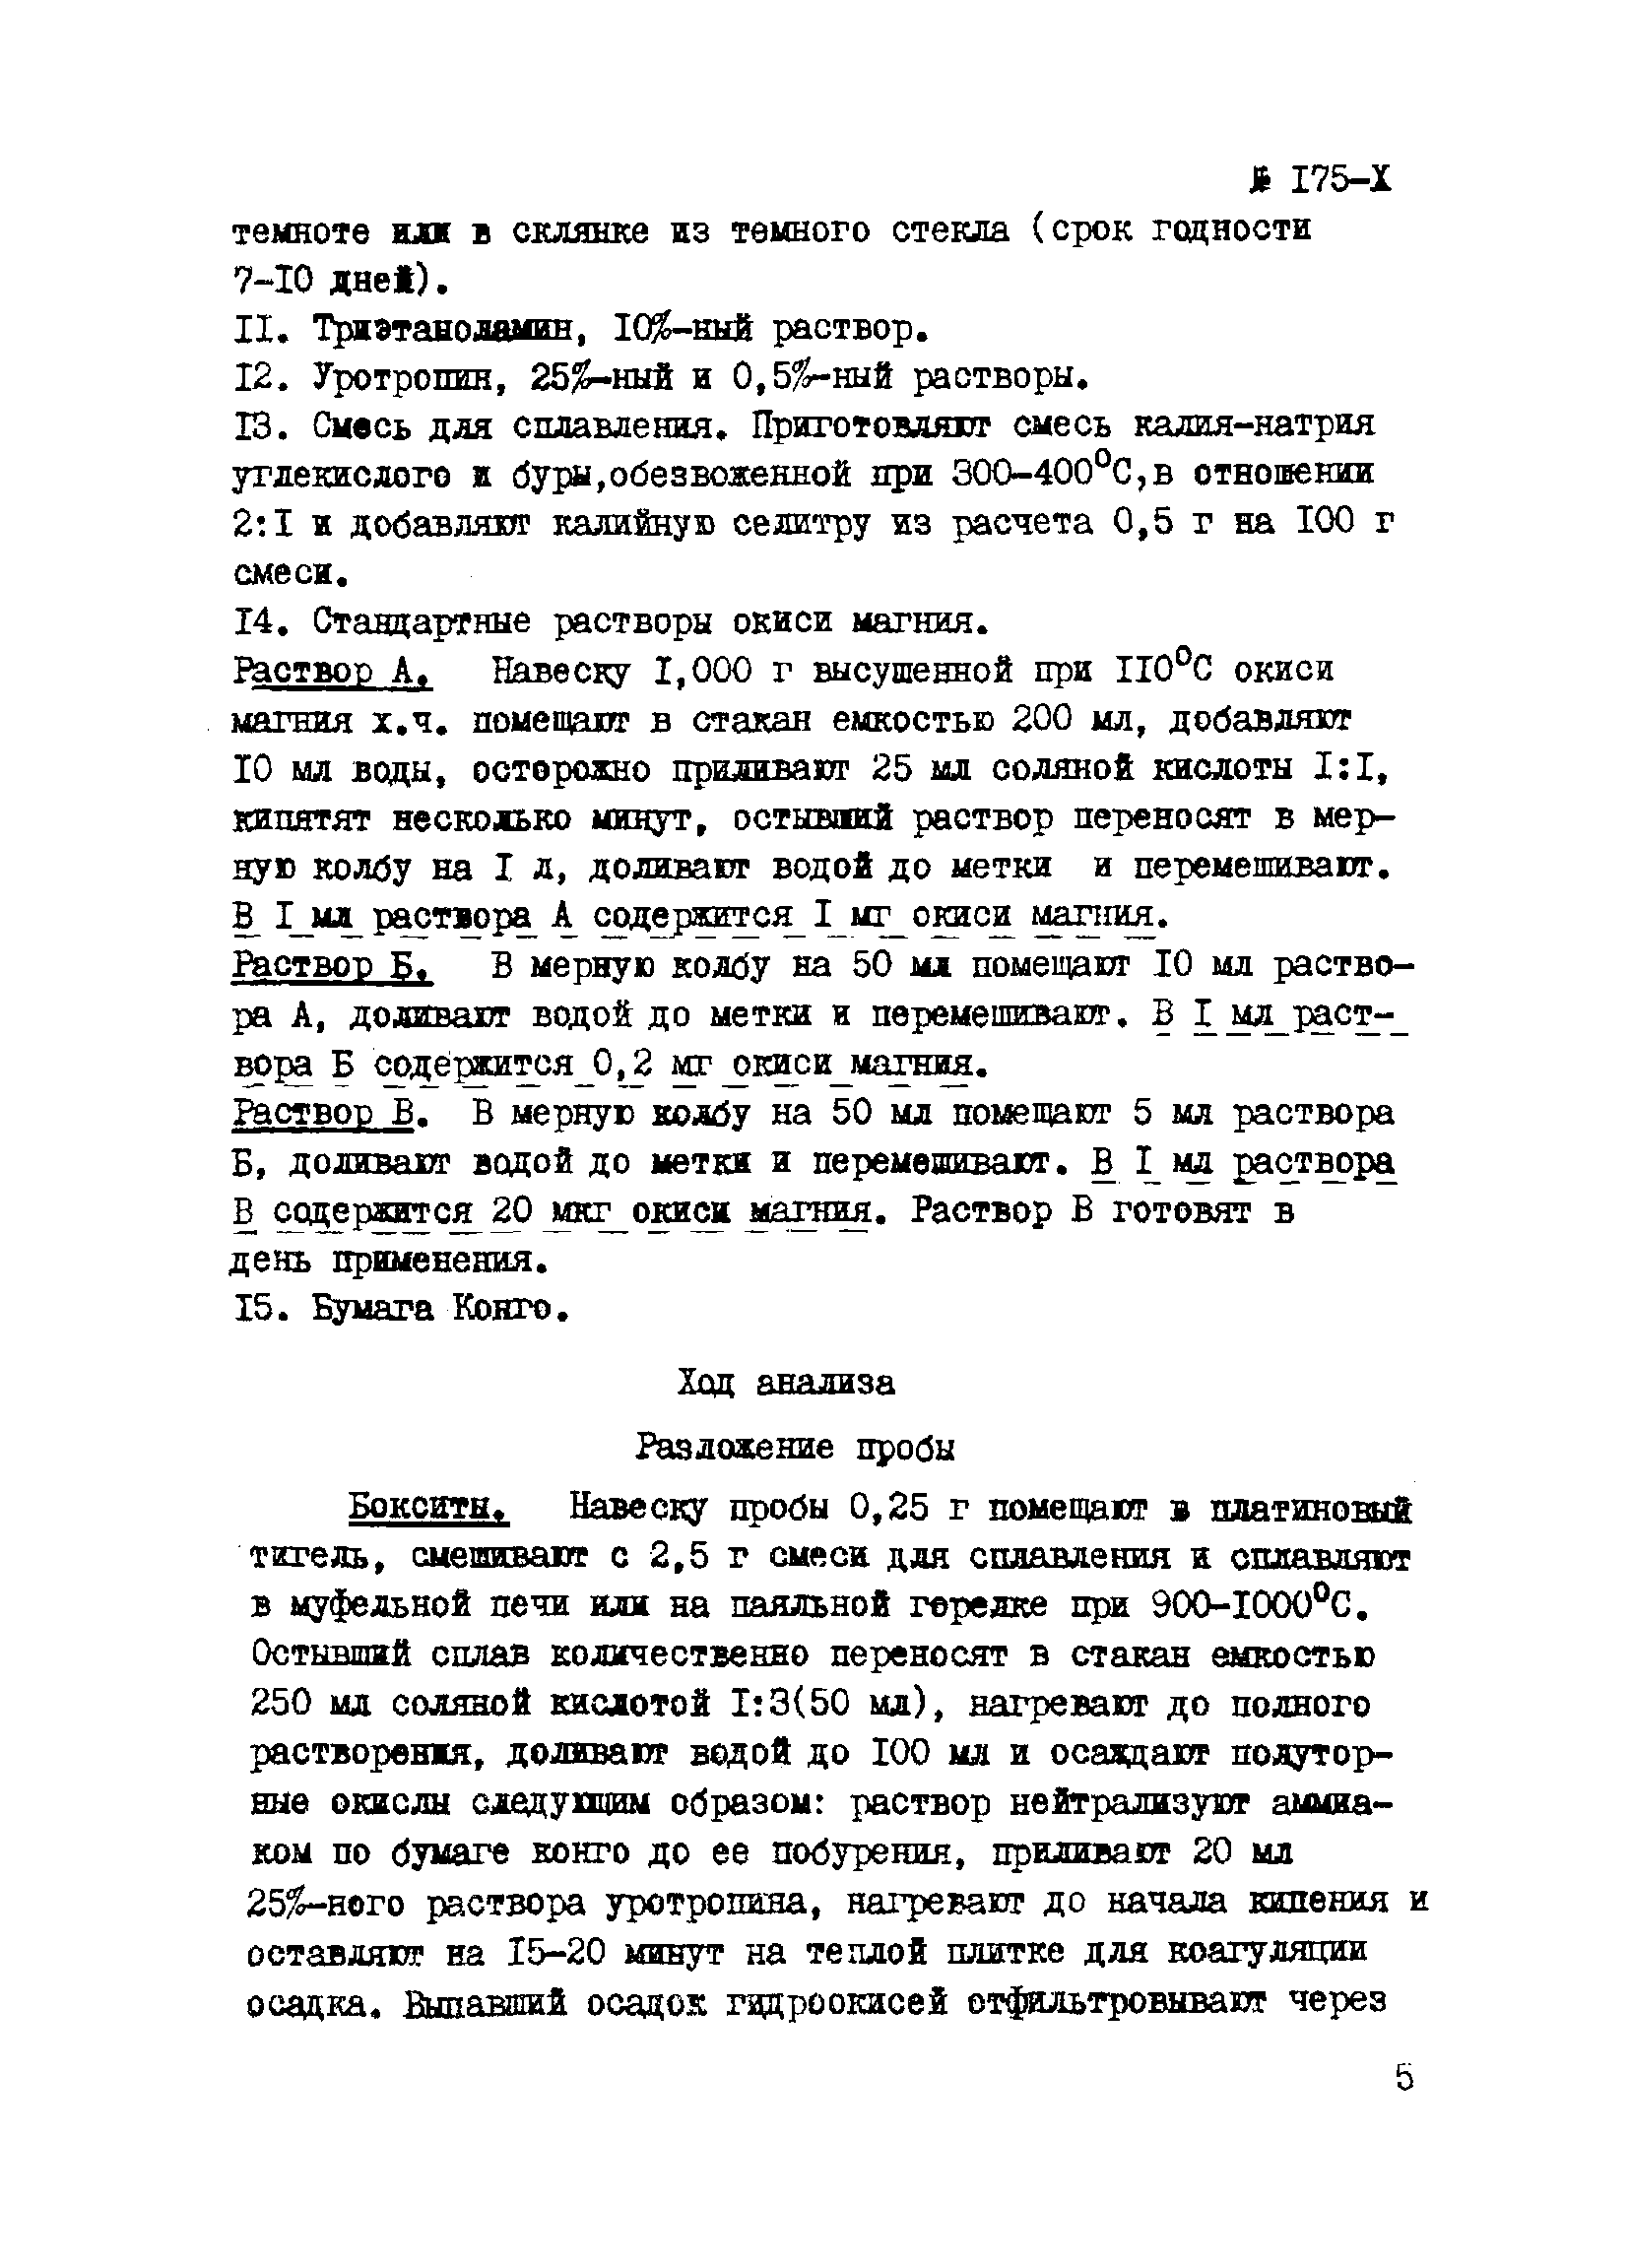 Инструкция НСАМ 175-Х